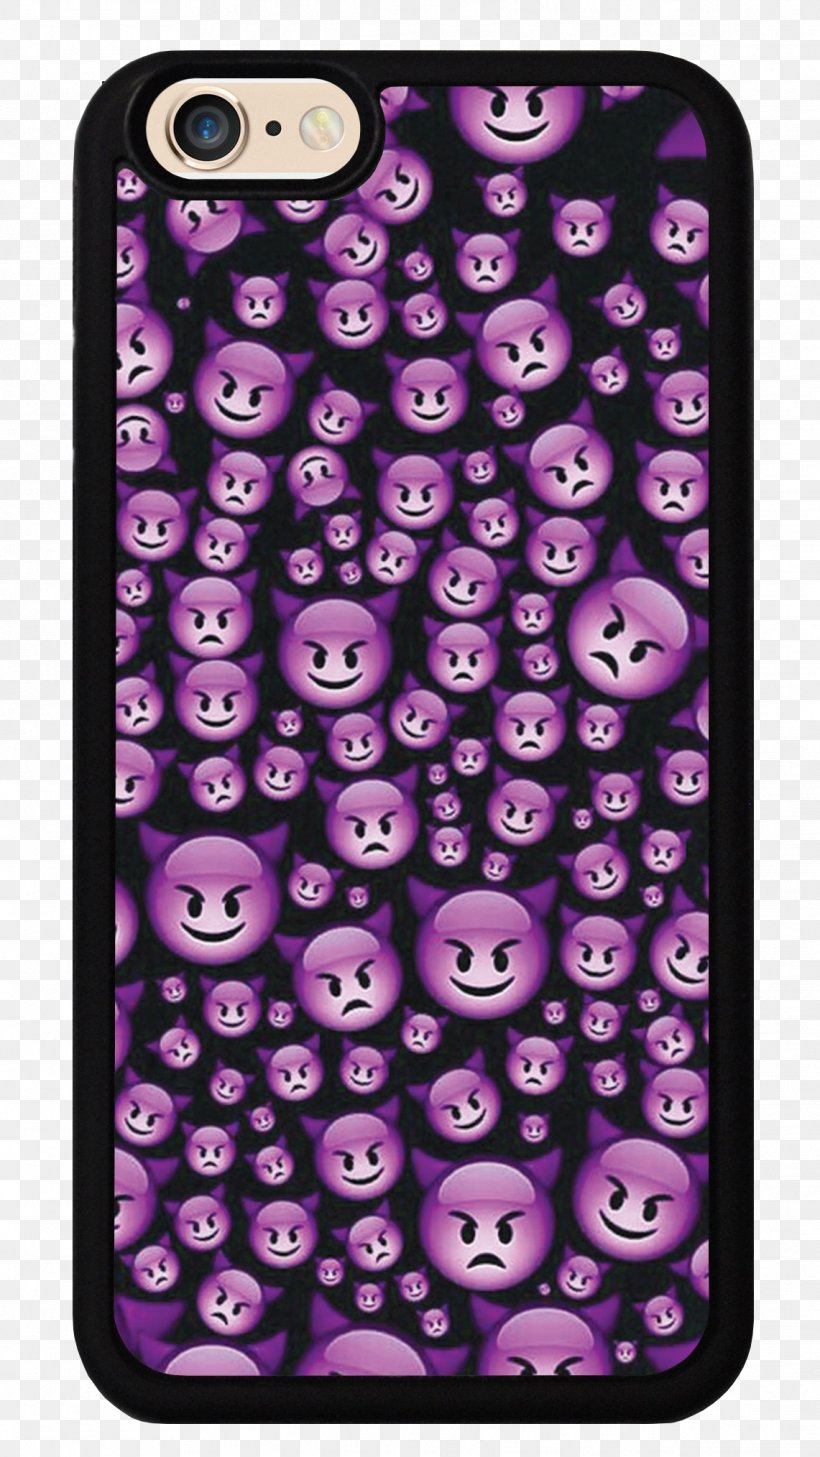 Devil Emoji Wallpapers